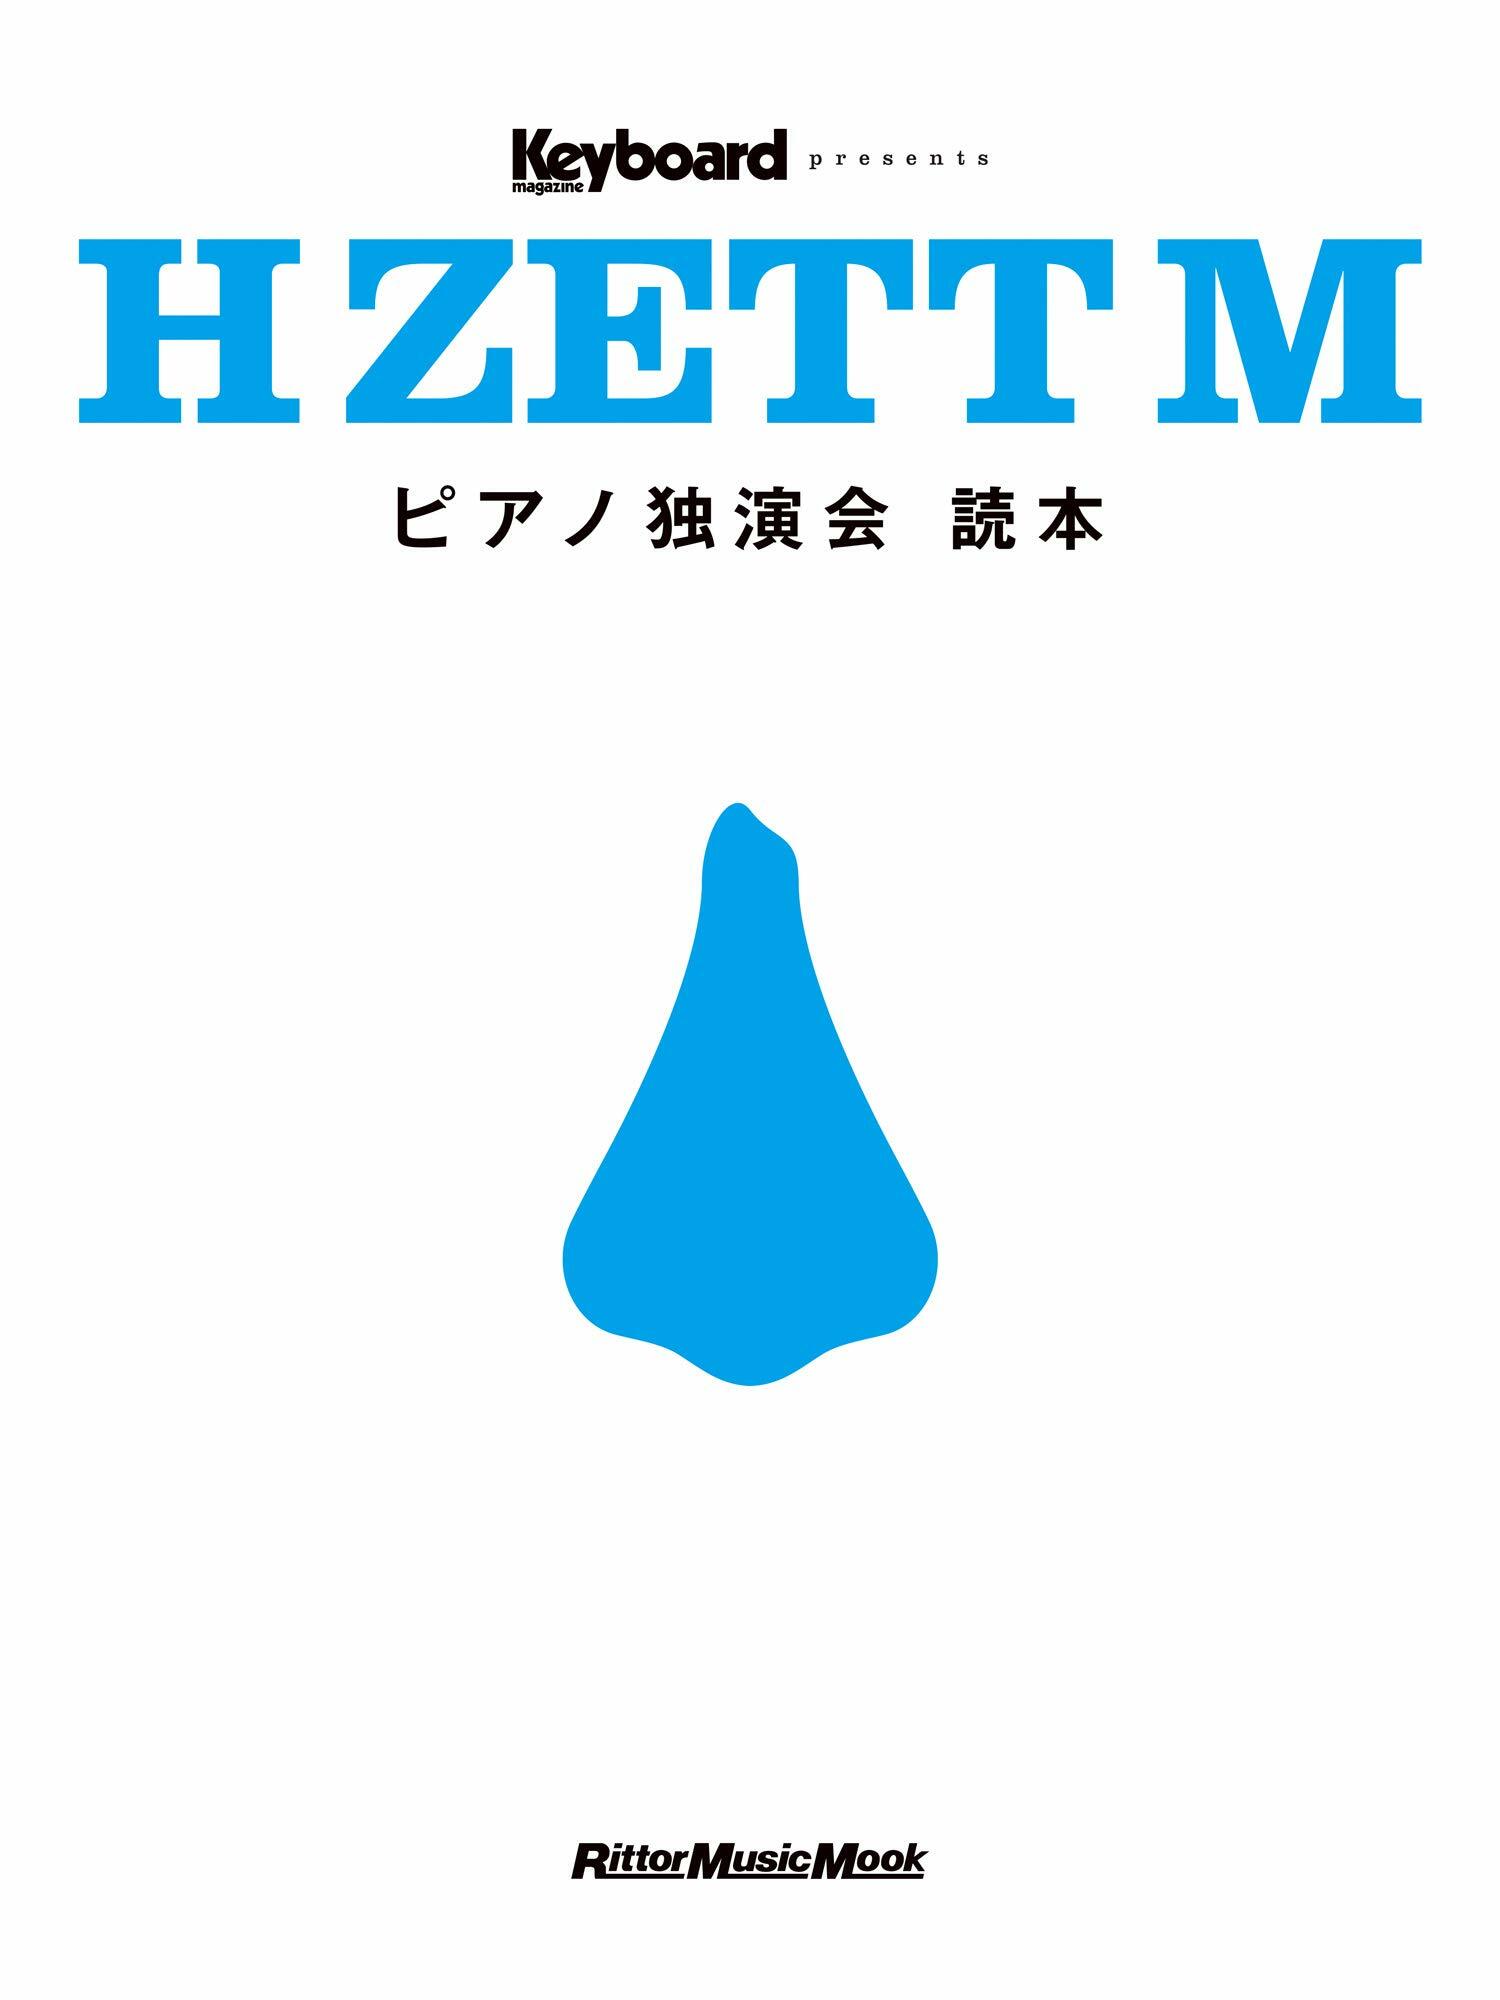 H ZETT M ピアノ獨演會 讀本 (リット-ミュ-ジック·ムック)